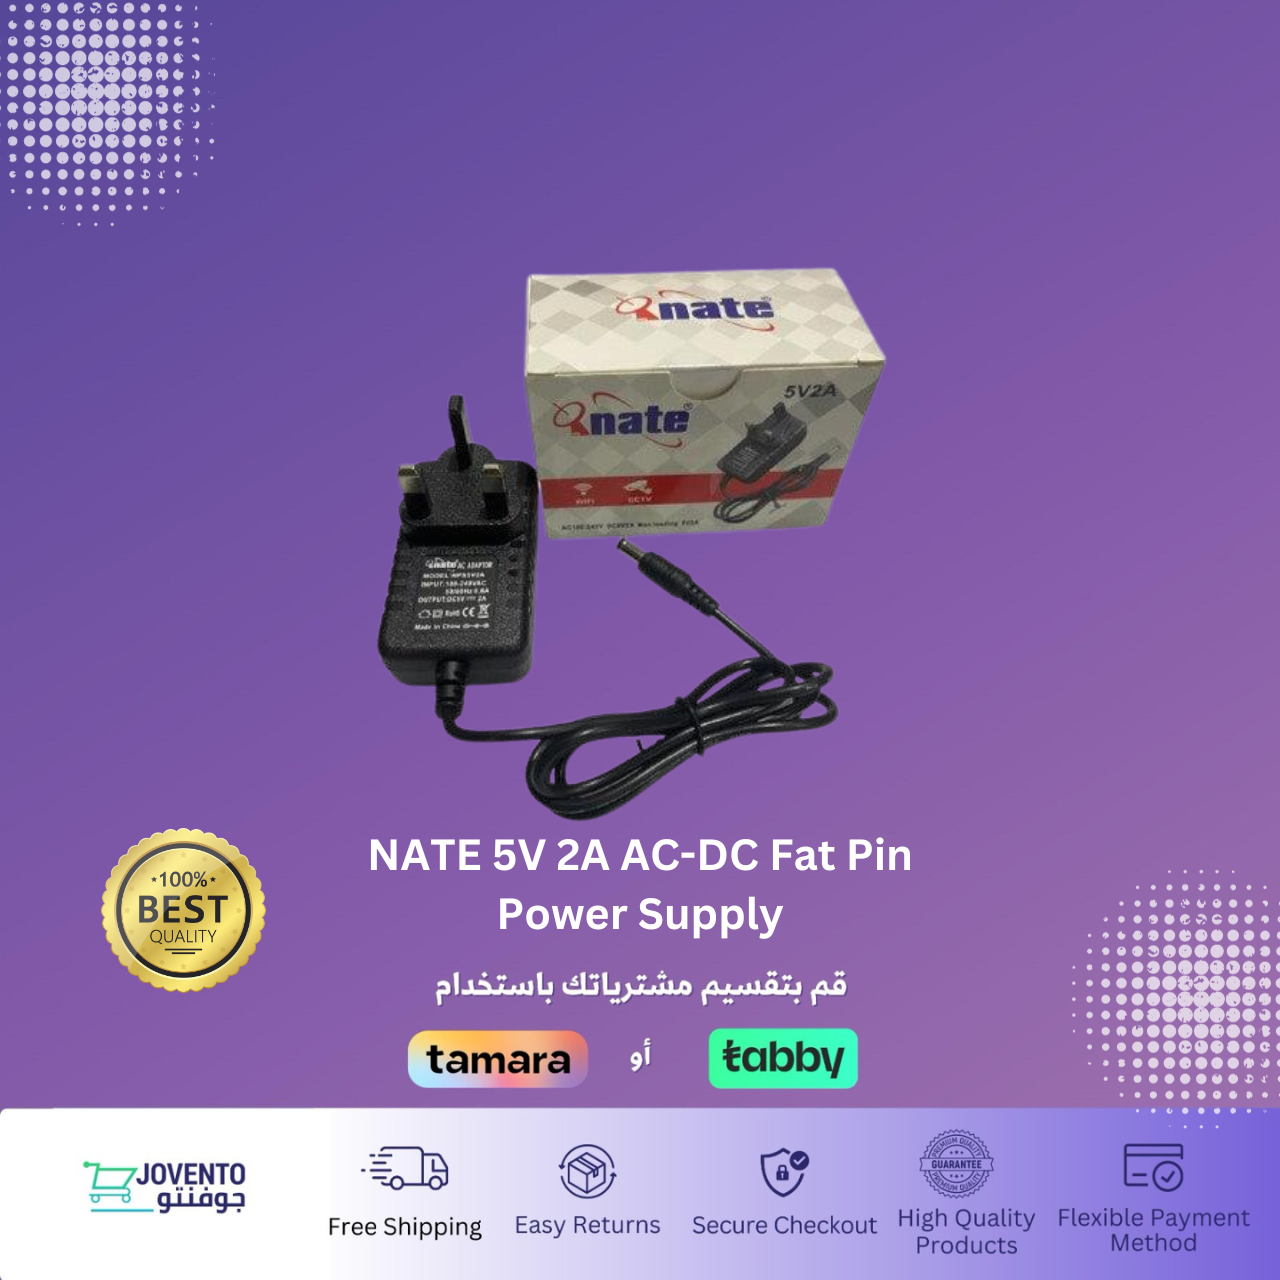 NATE 5V 2A AC-DC Fat Pin Power Supply